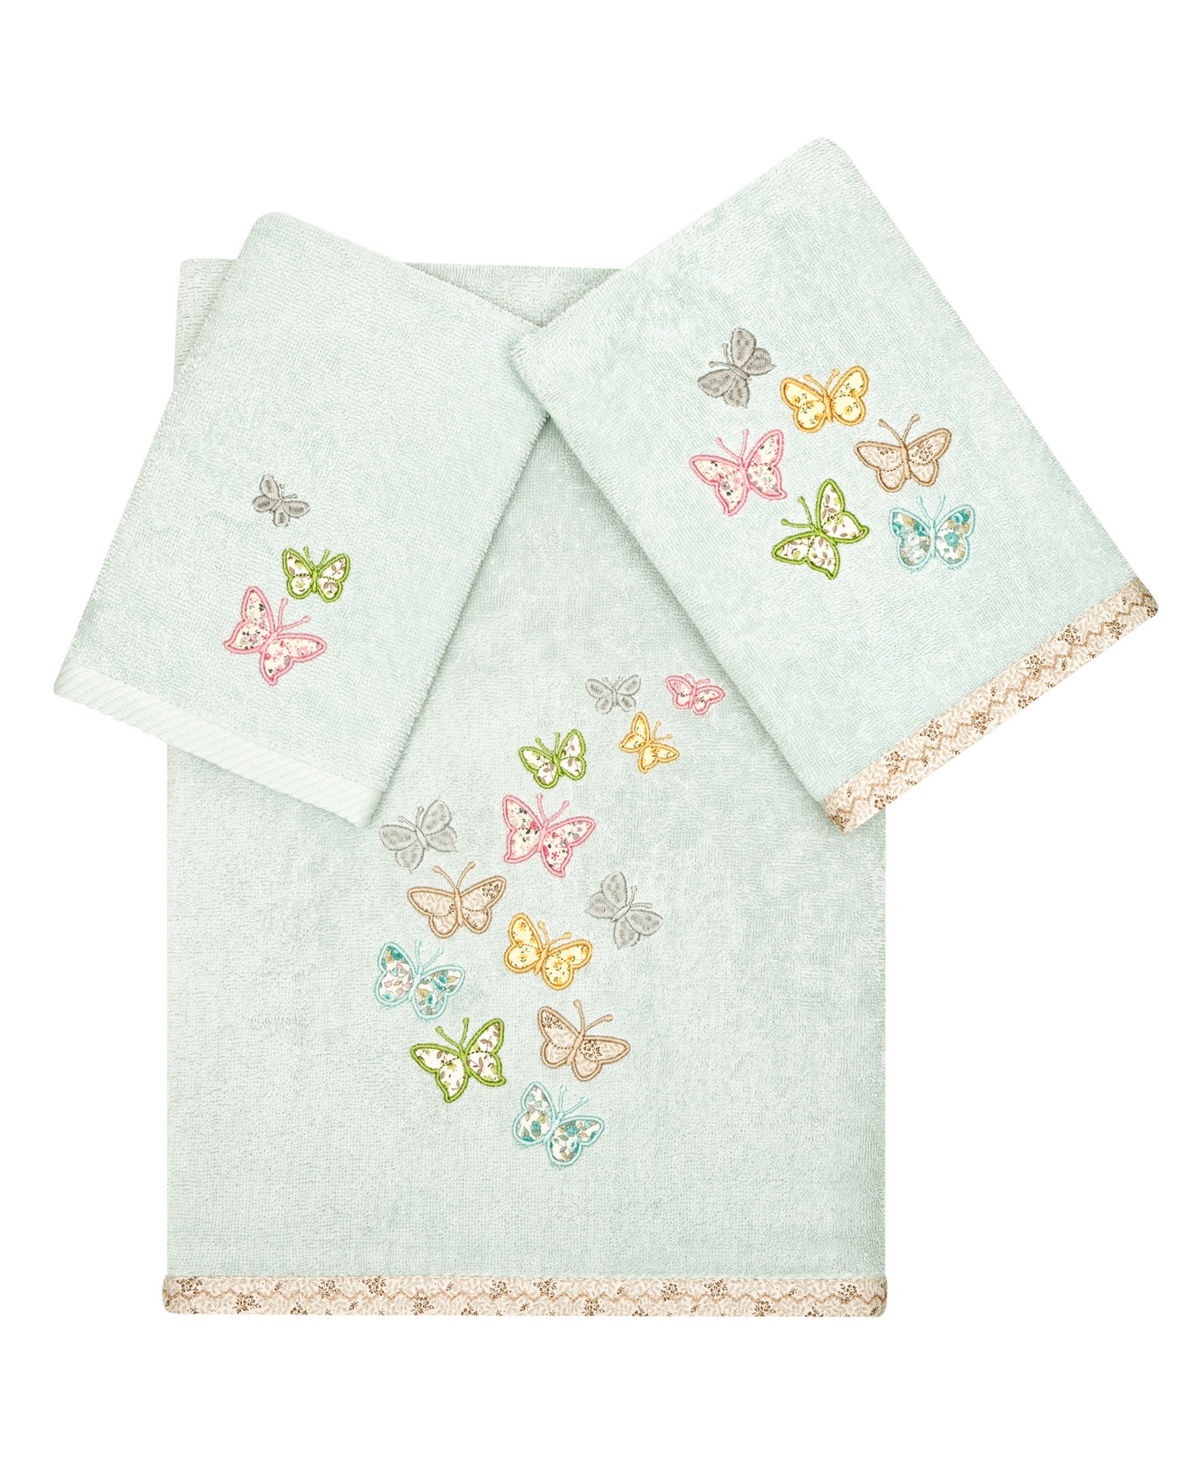 Linum Home Textiles Turkish Cotton Mariposa Embellished Towel Set, 3 Piece In Aqua